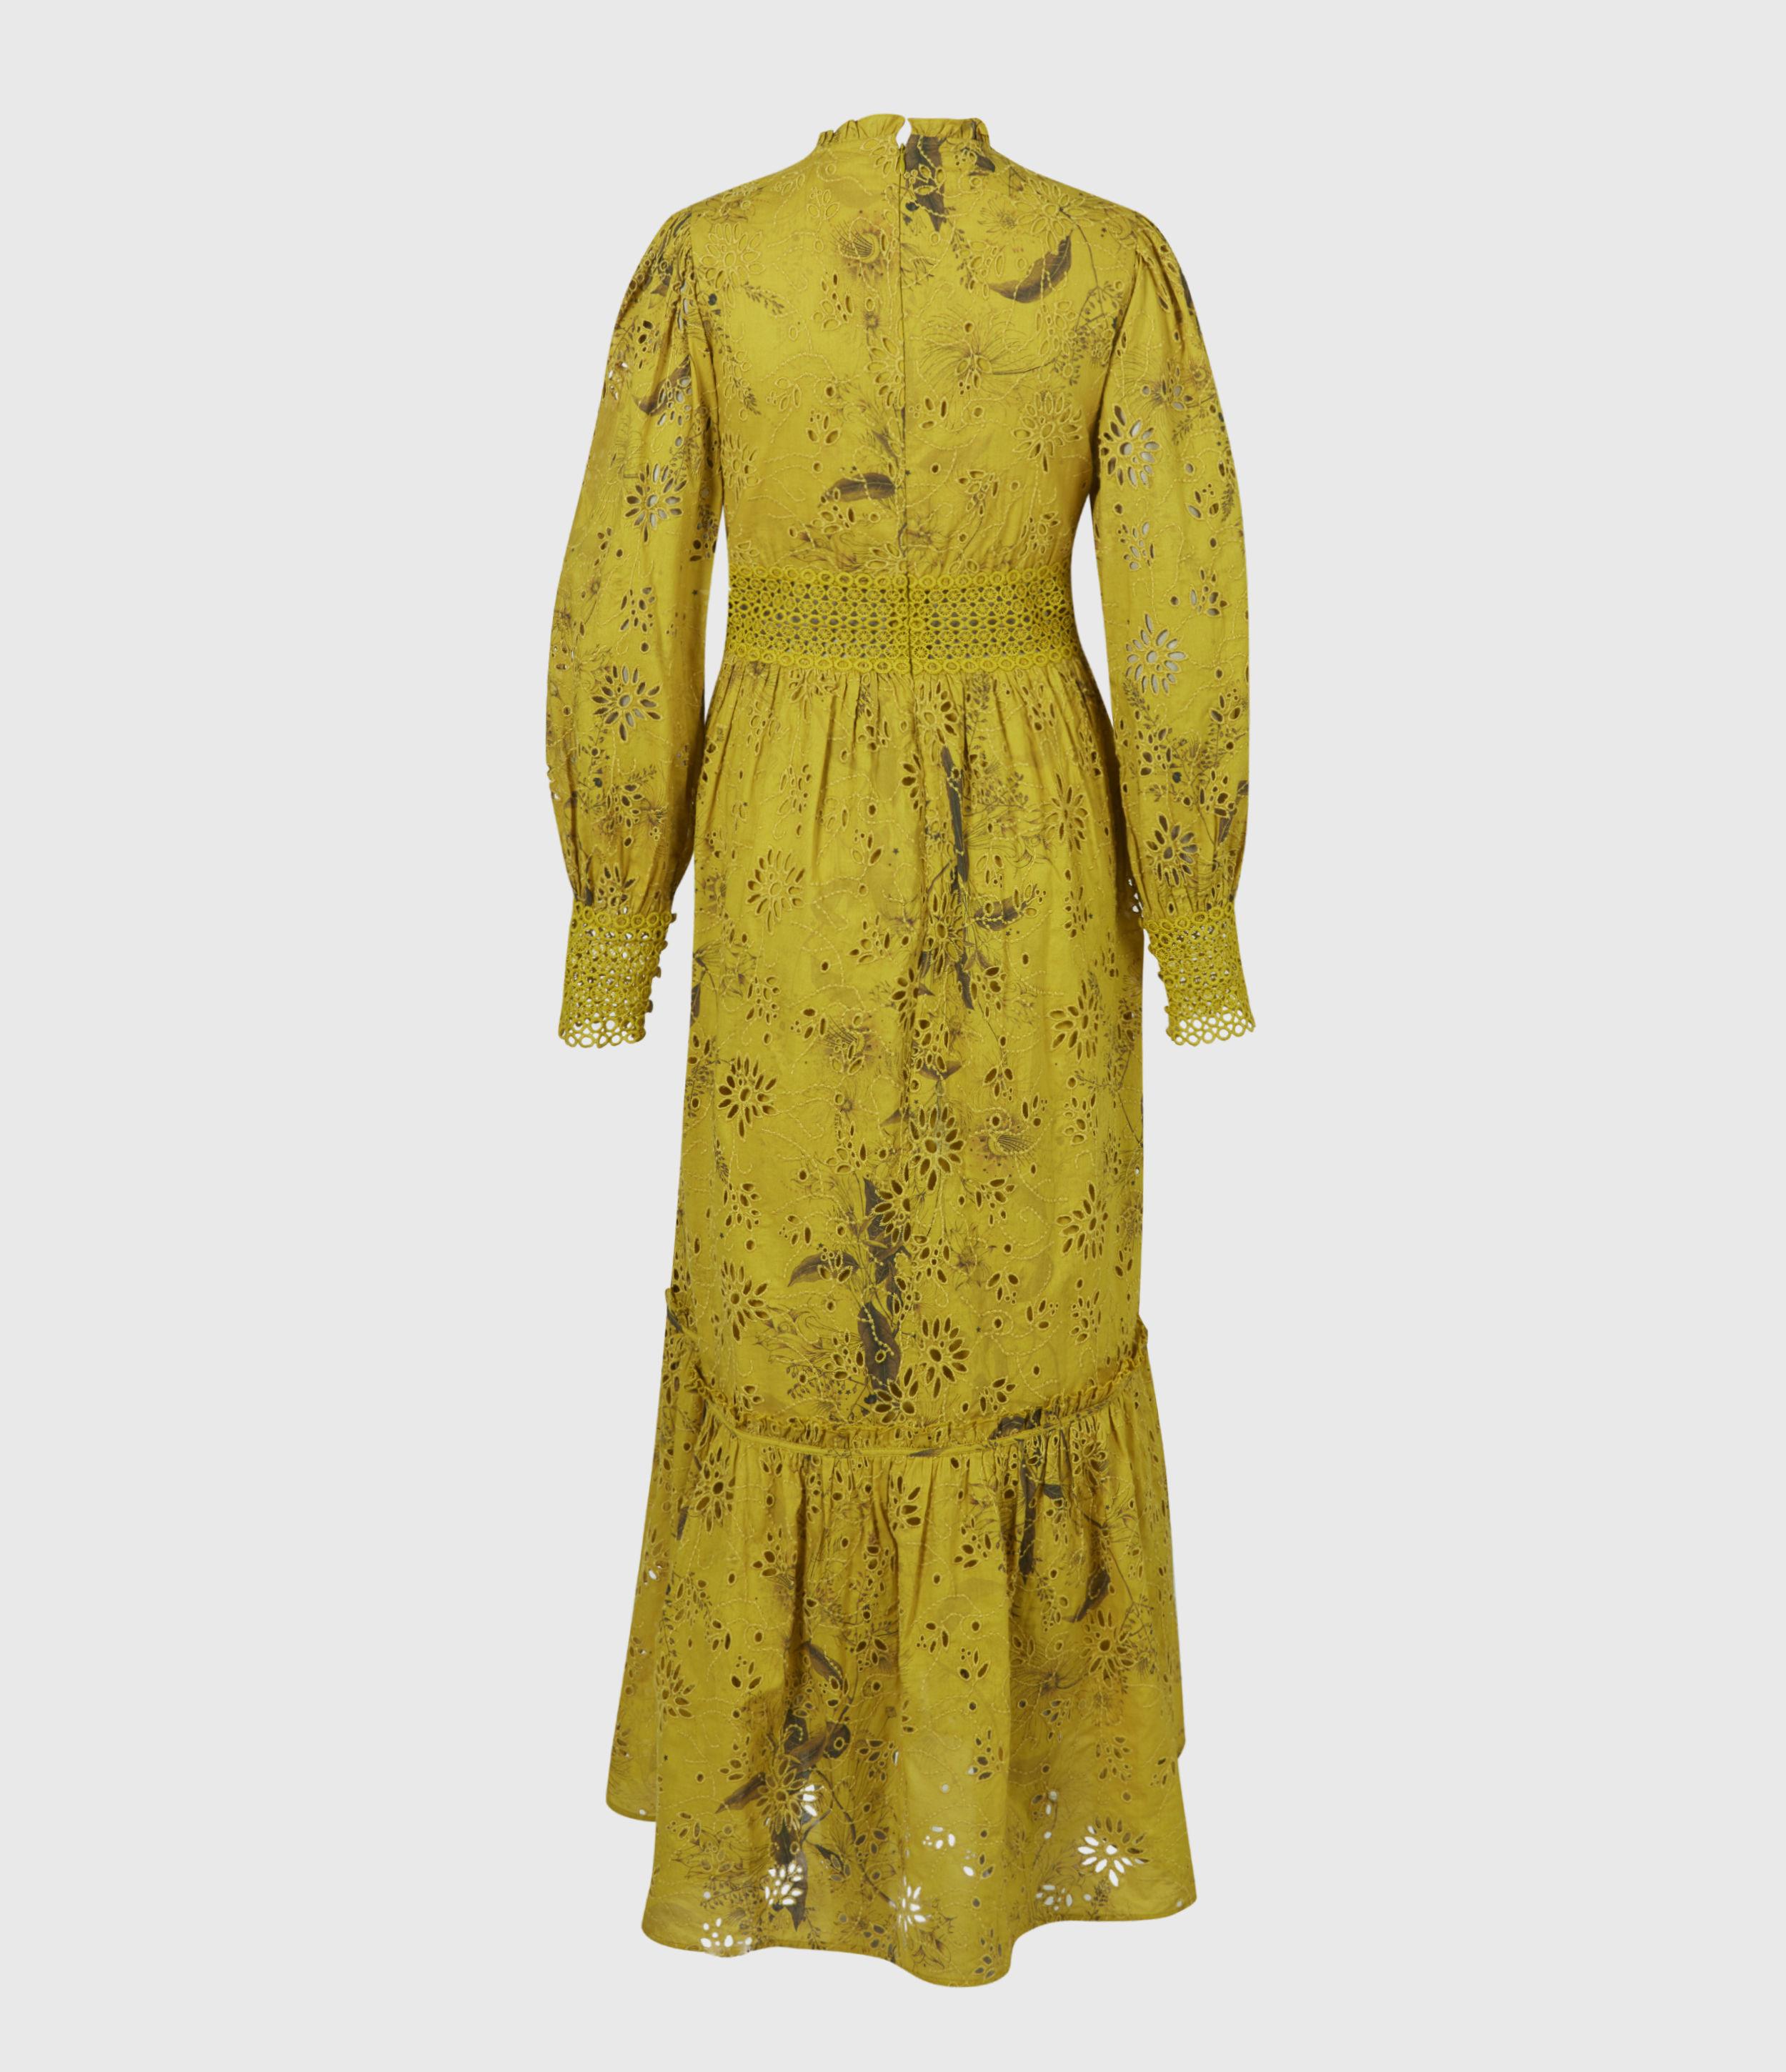 Let's talk about the golden saints fashion clothes : r/SaintSeiya